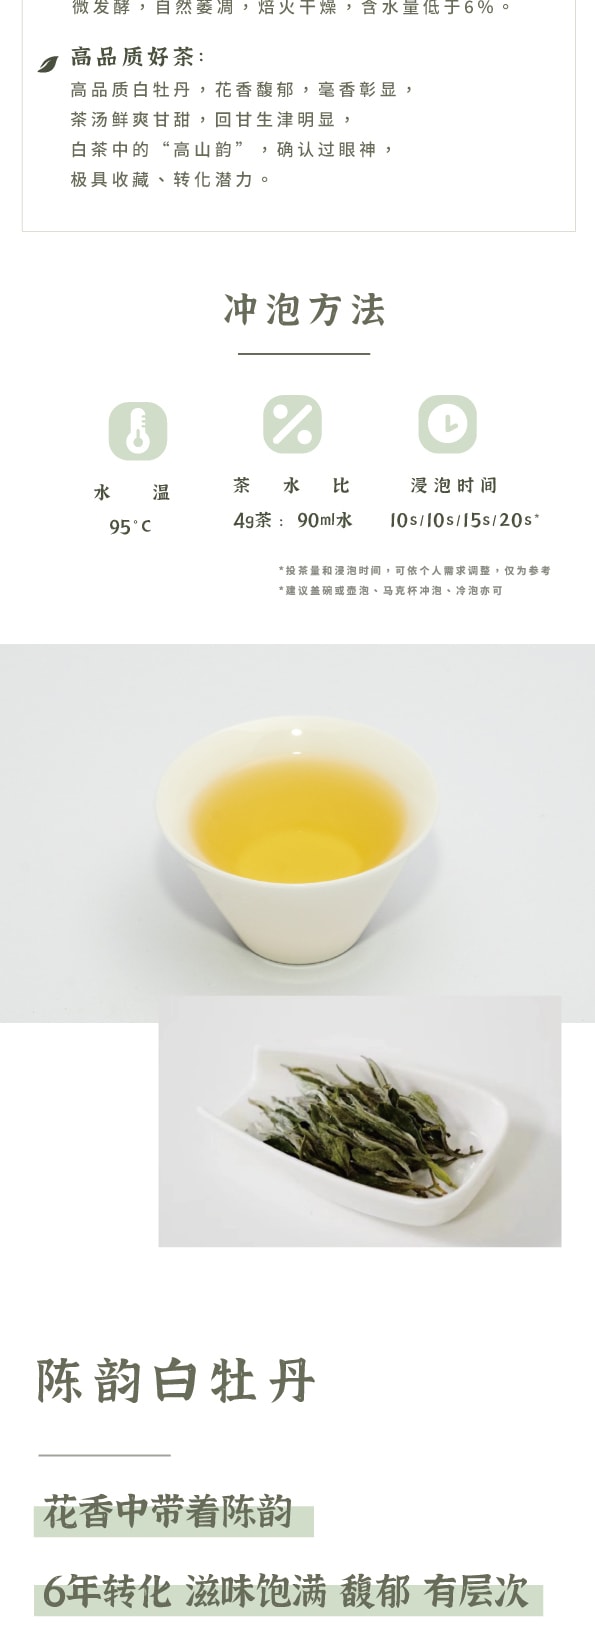 ZhaoTea 白茶品嚐 4款經典白茶 白毫銀針 花香白牡丹 陳韻白牡丹 陳皮白茶 茶葉 白茶 22g